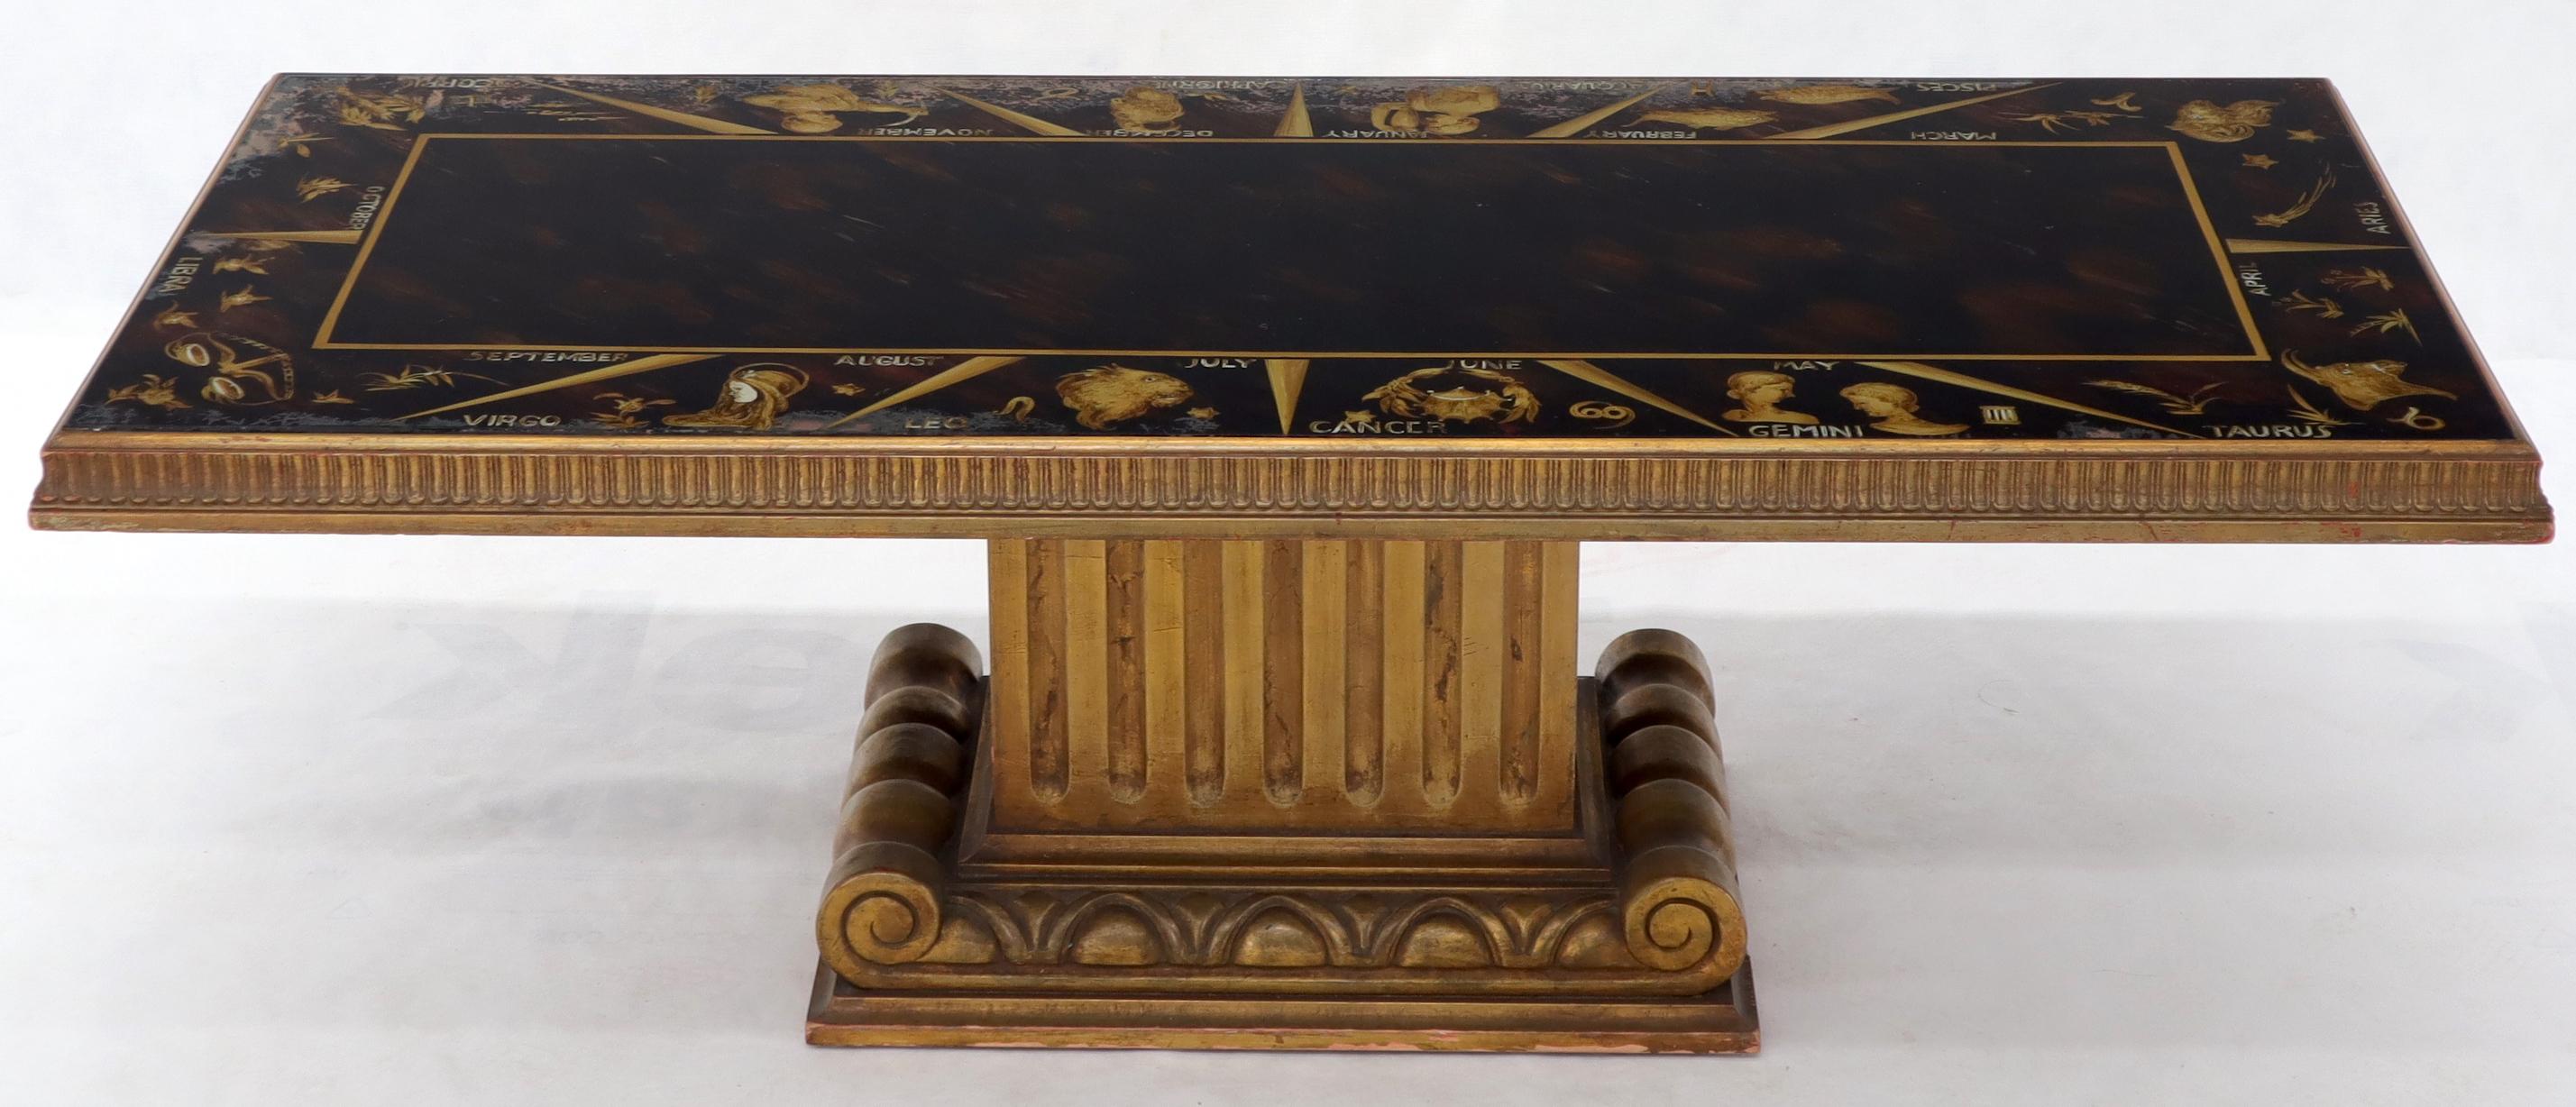 Decorative reverse painted glass top rectangular coffee table Art Deco Mid-Century Modern.